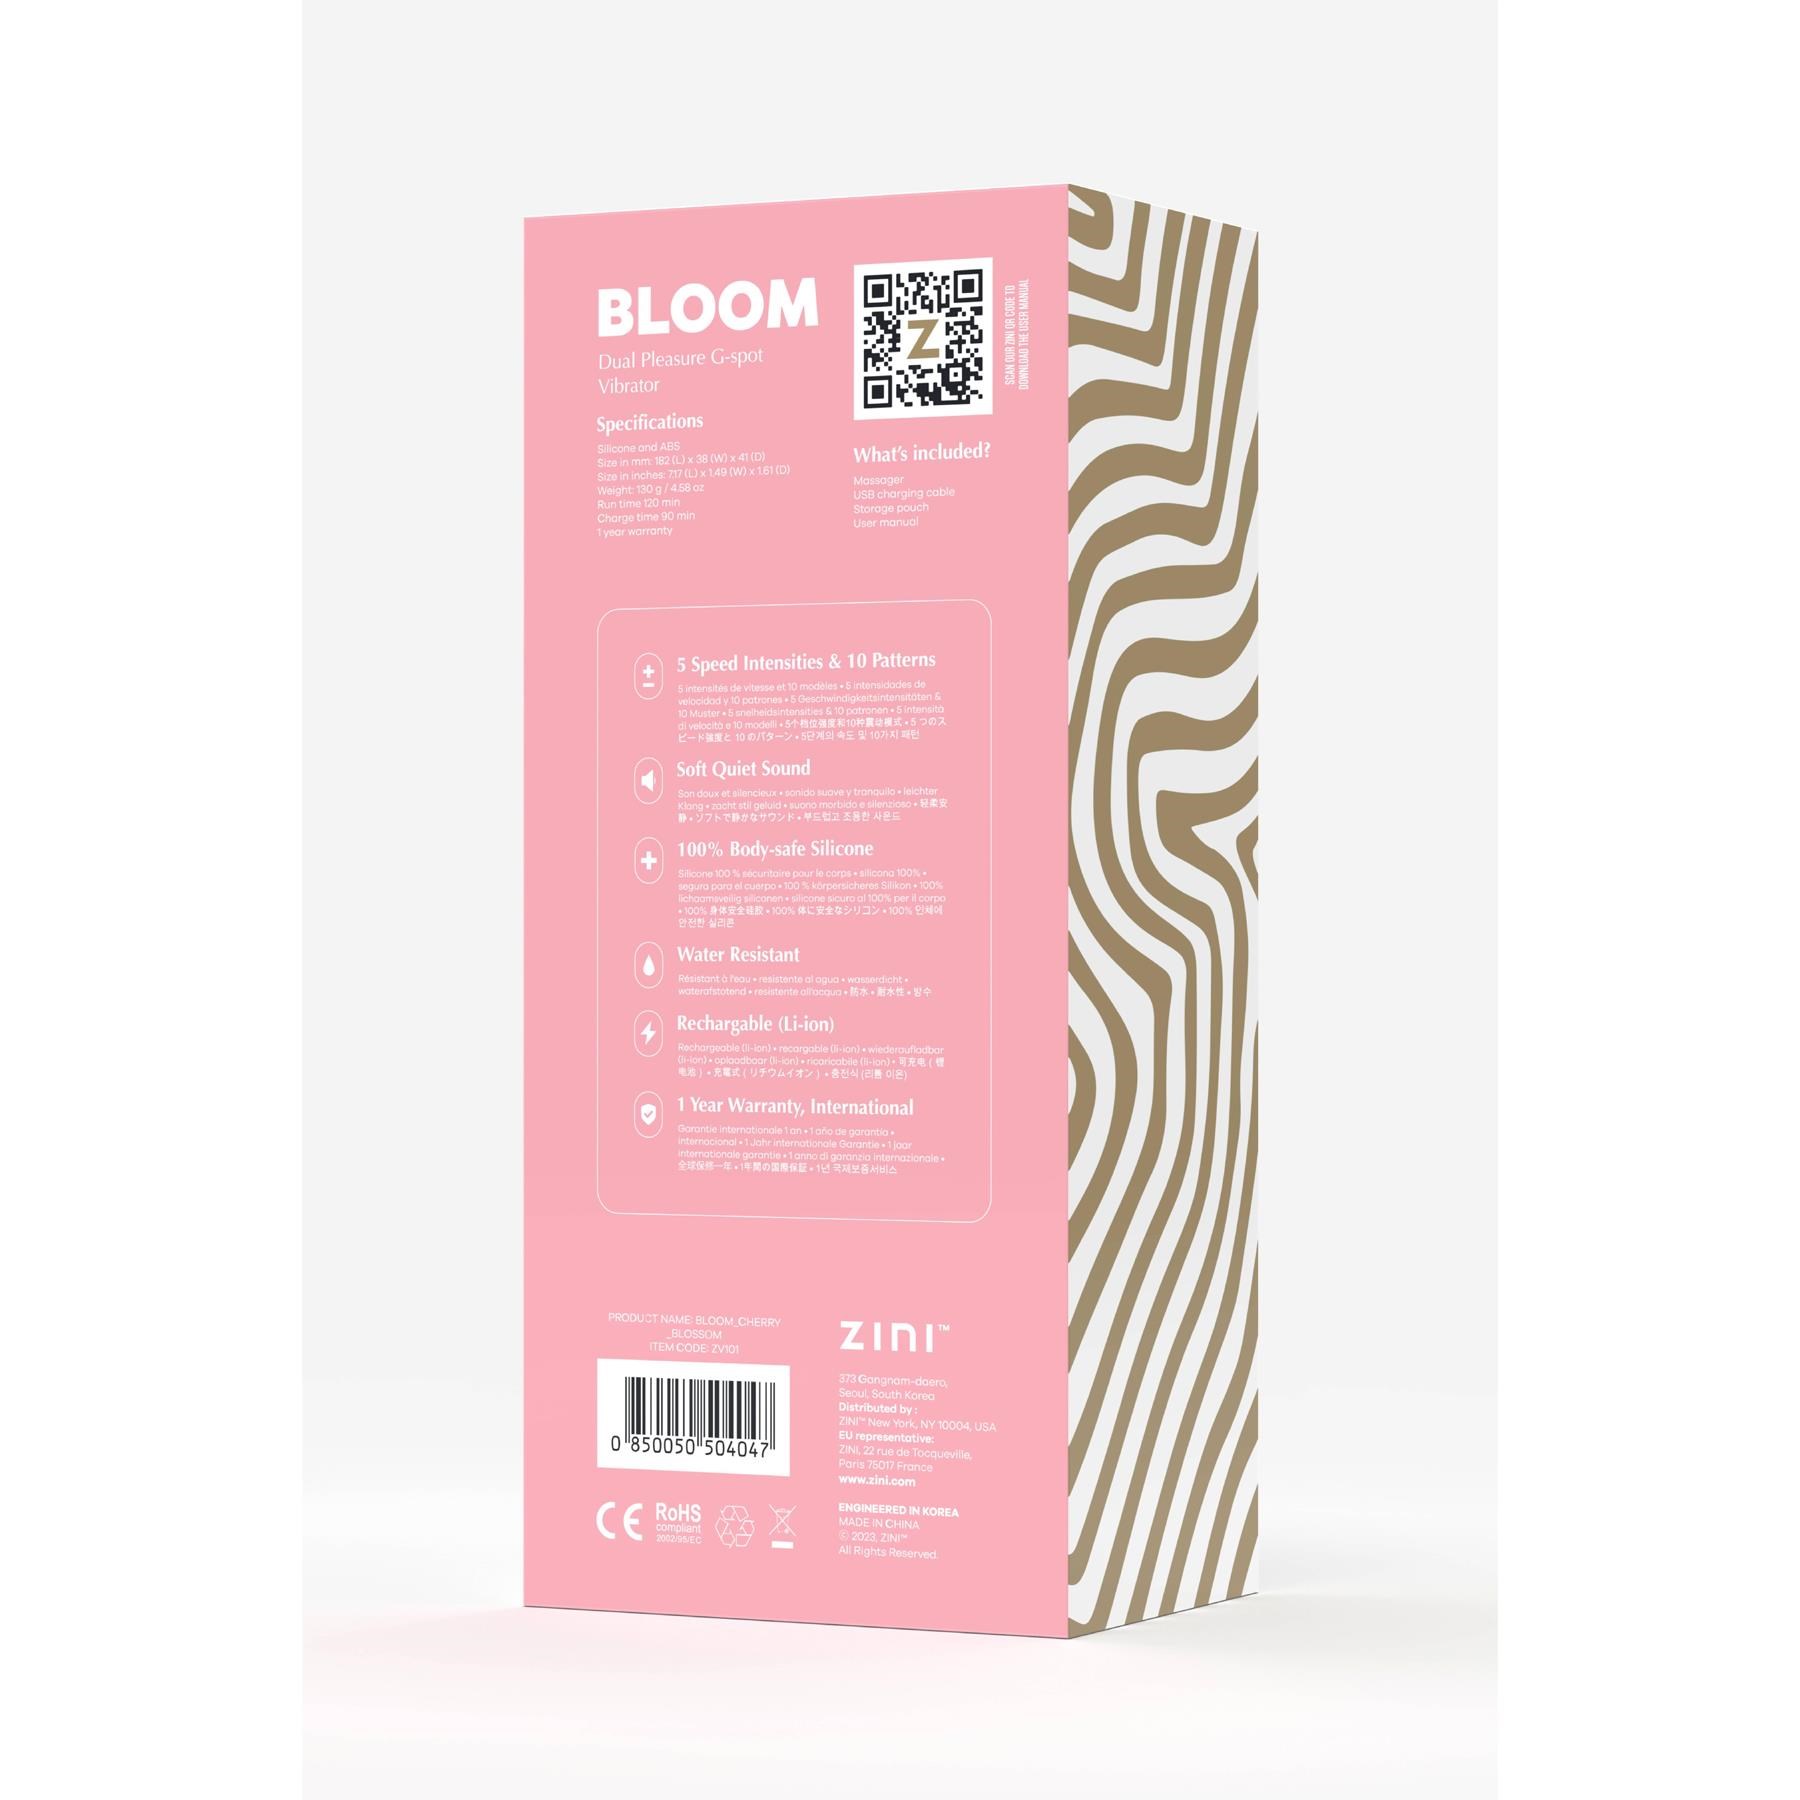 Zini Bloom G-Spot Massager - Packaging - Back